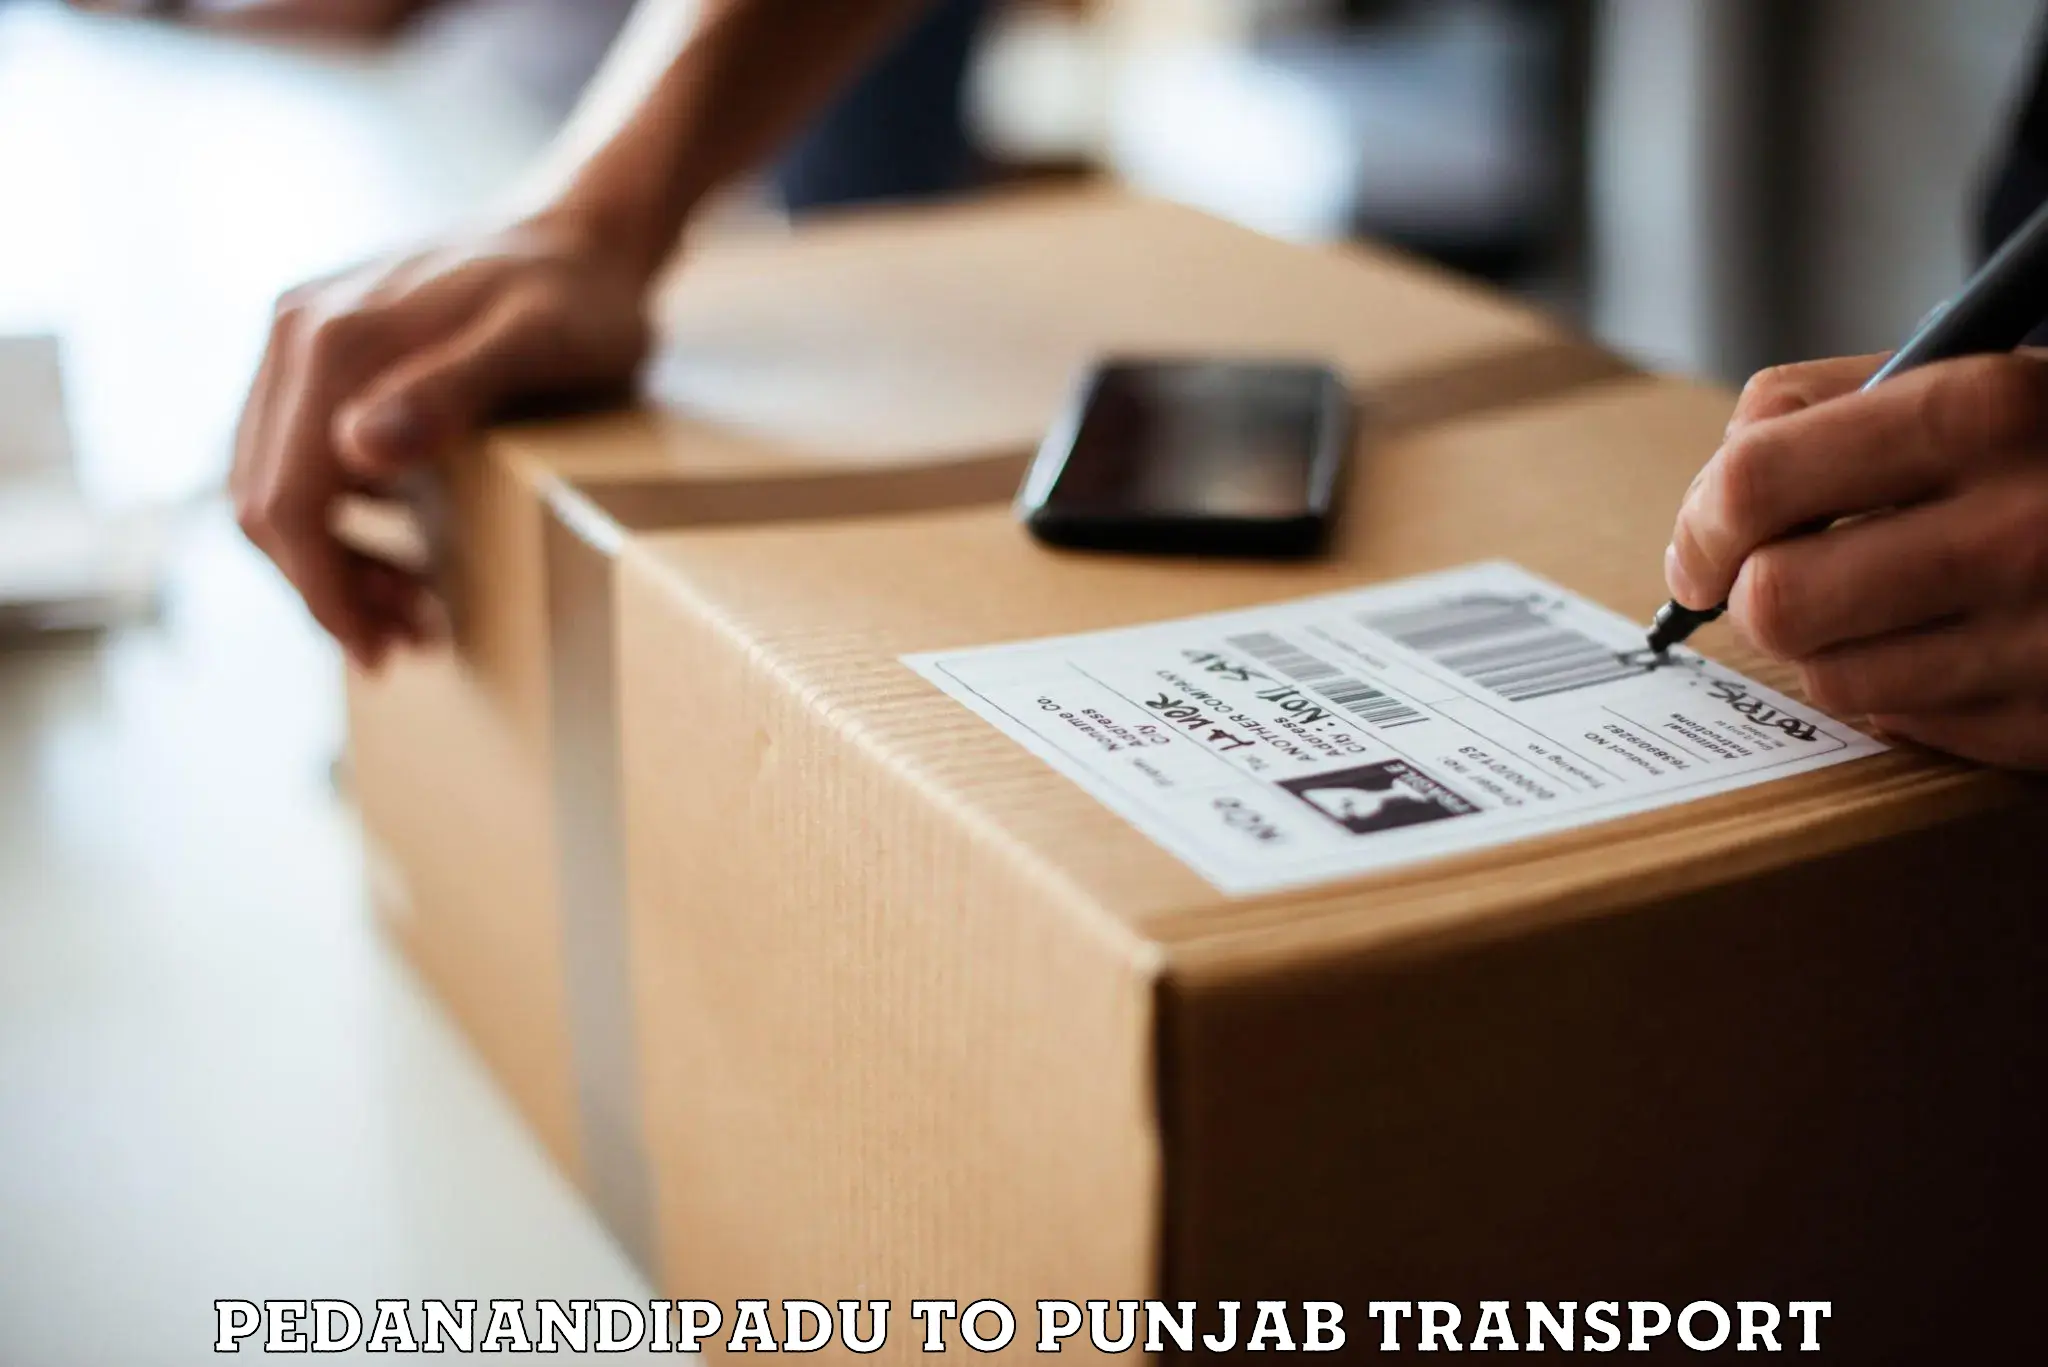 Express transport services in Pedanandipadu to Punjab